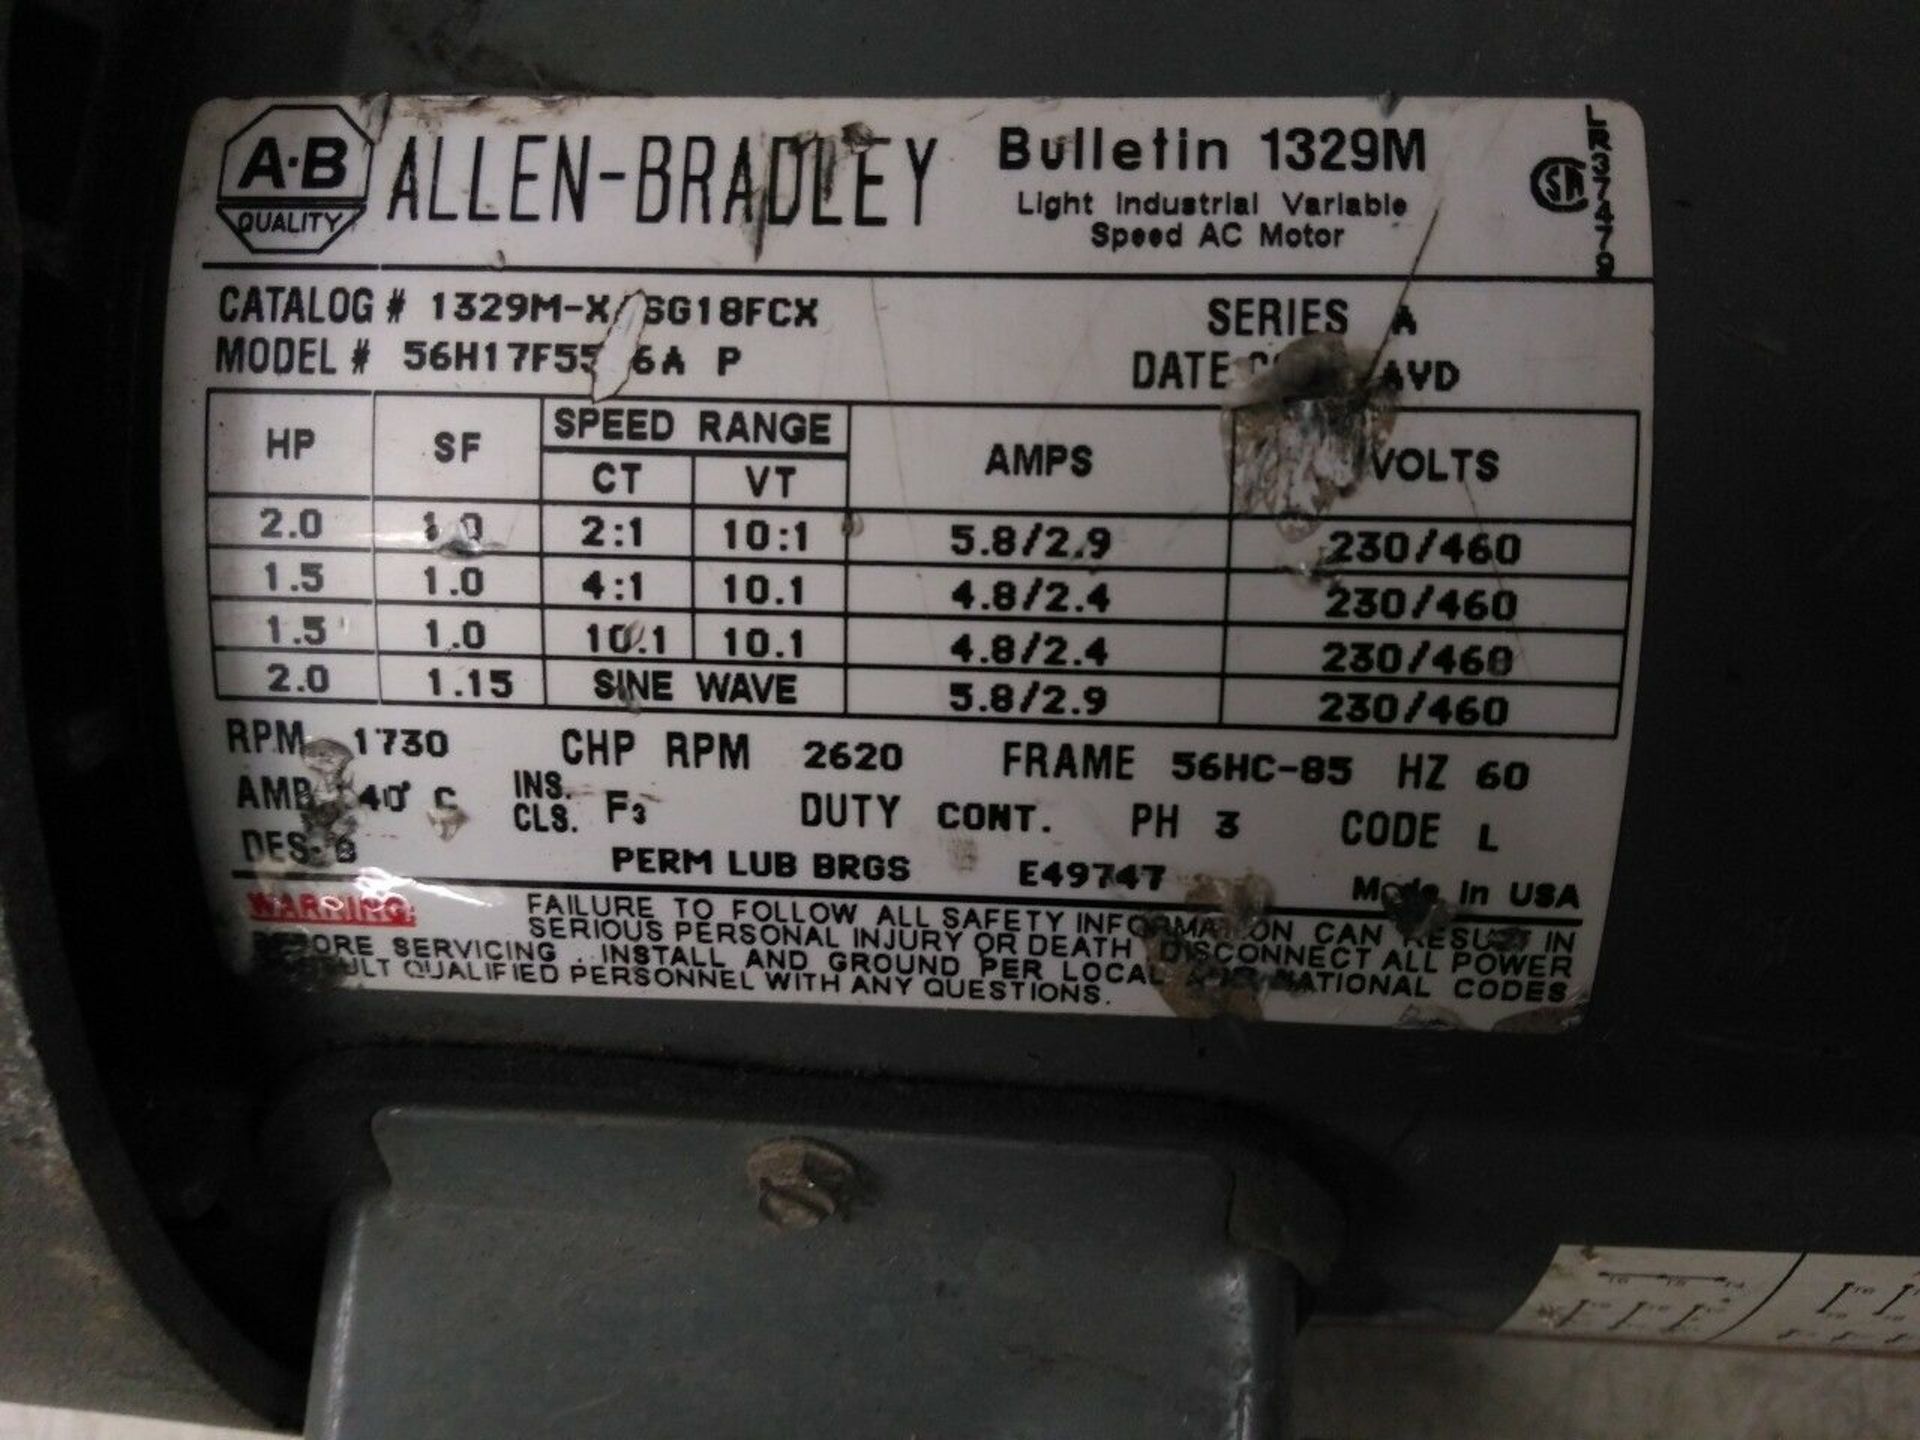 Allen Bradley Bulletin 1329M 2 HP motor with Stears Brake kit - Image 5 of 6